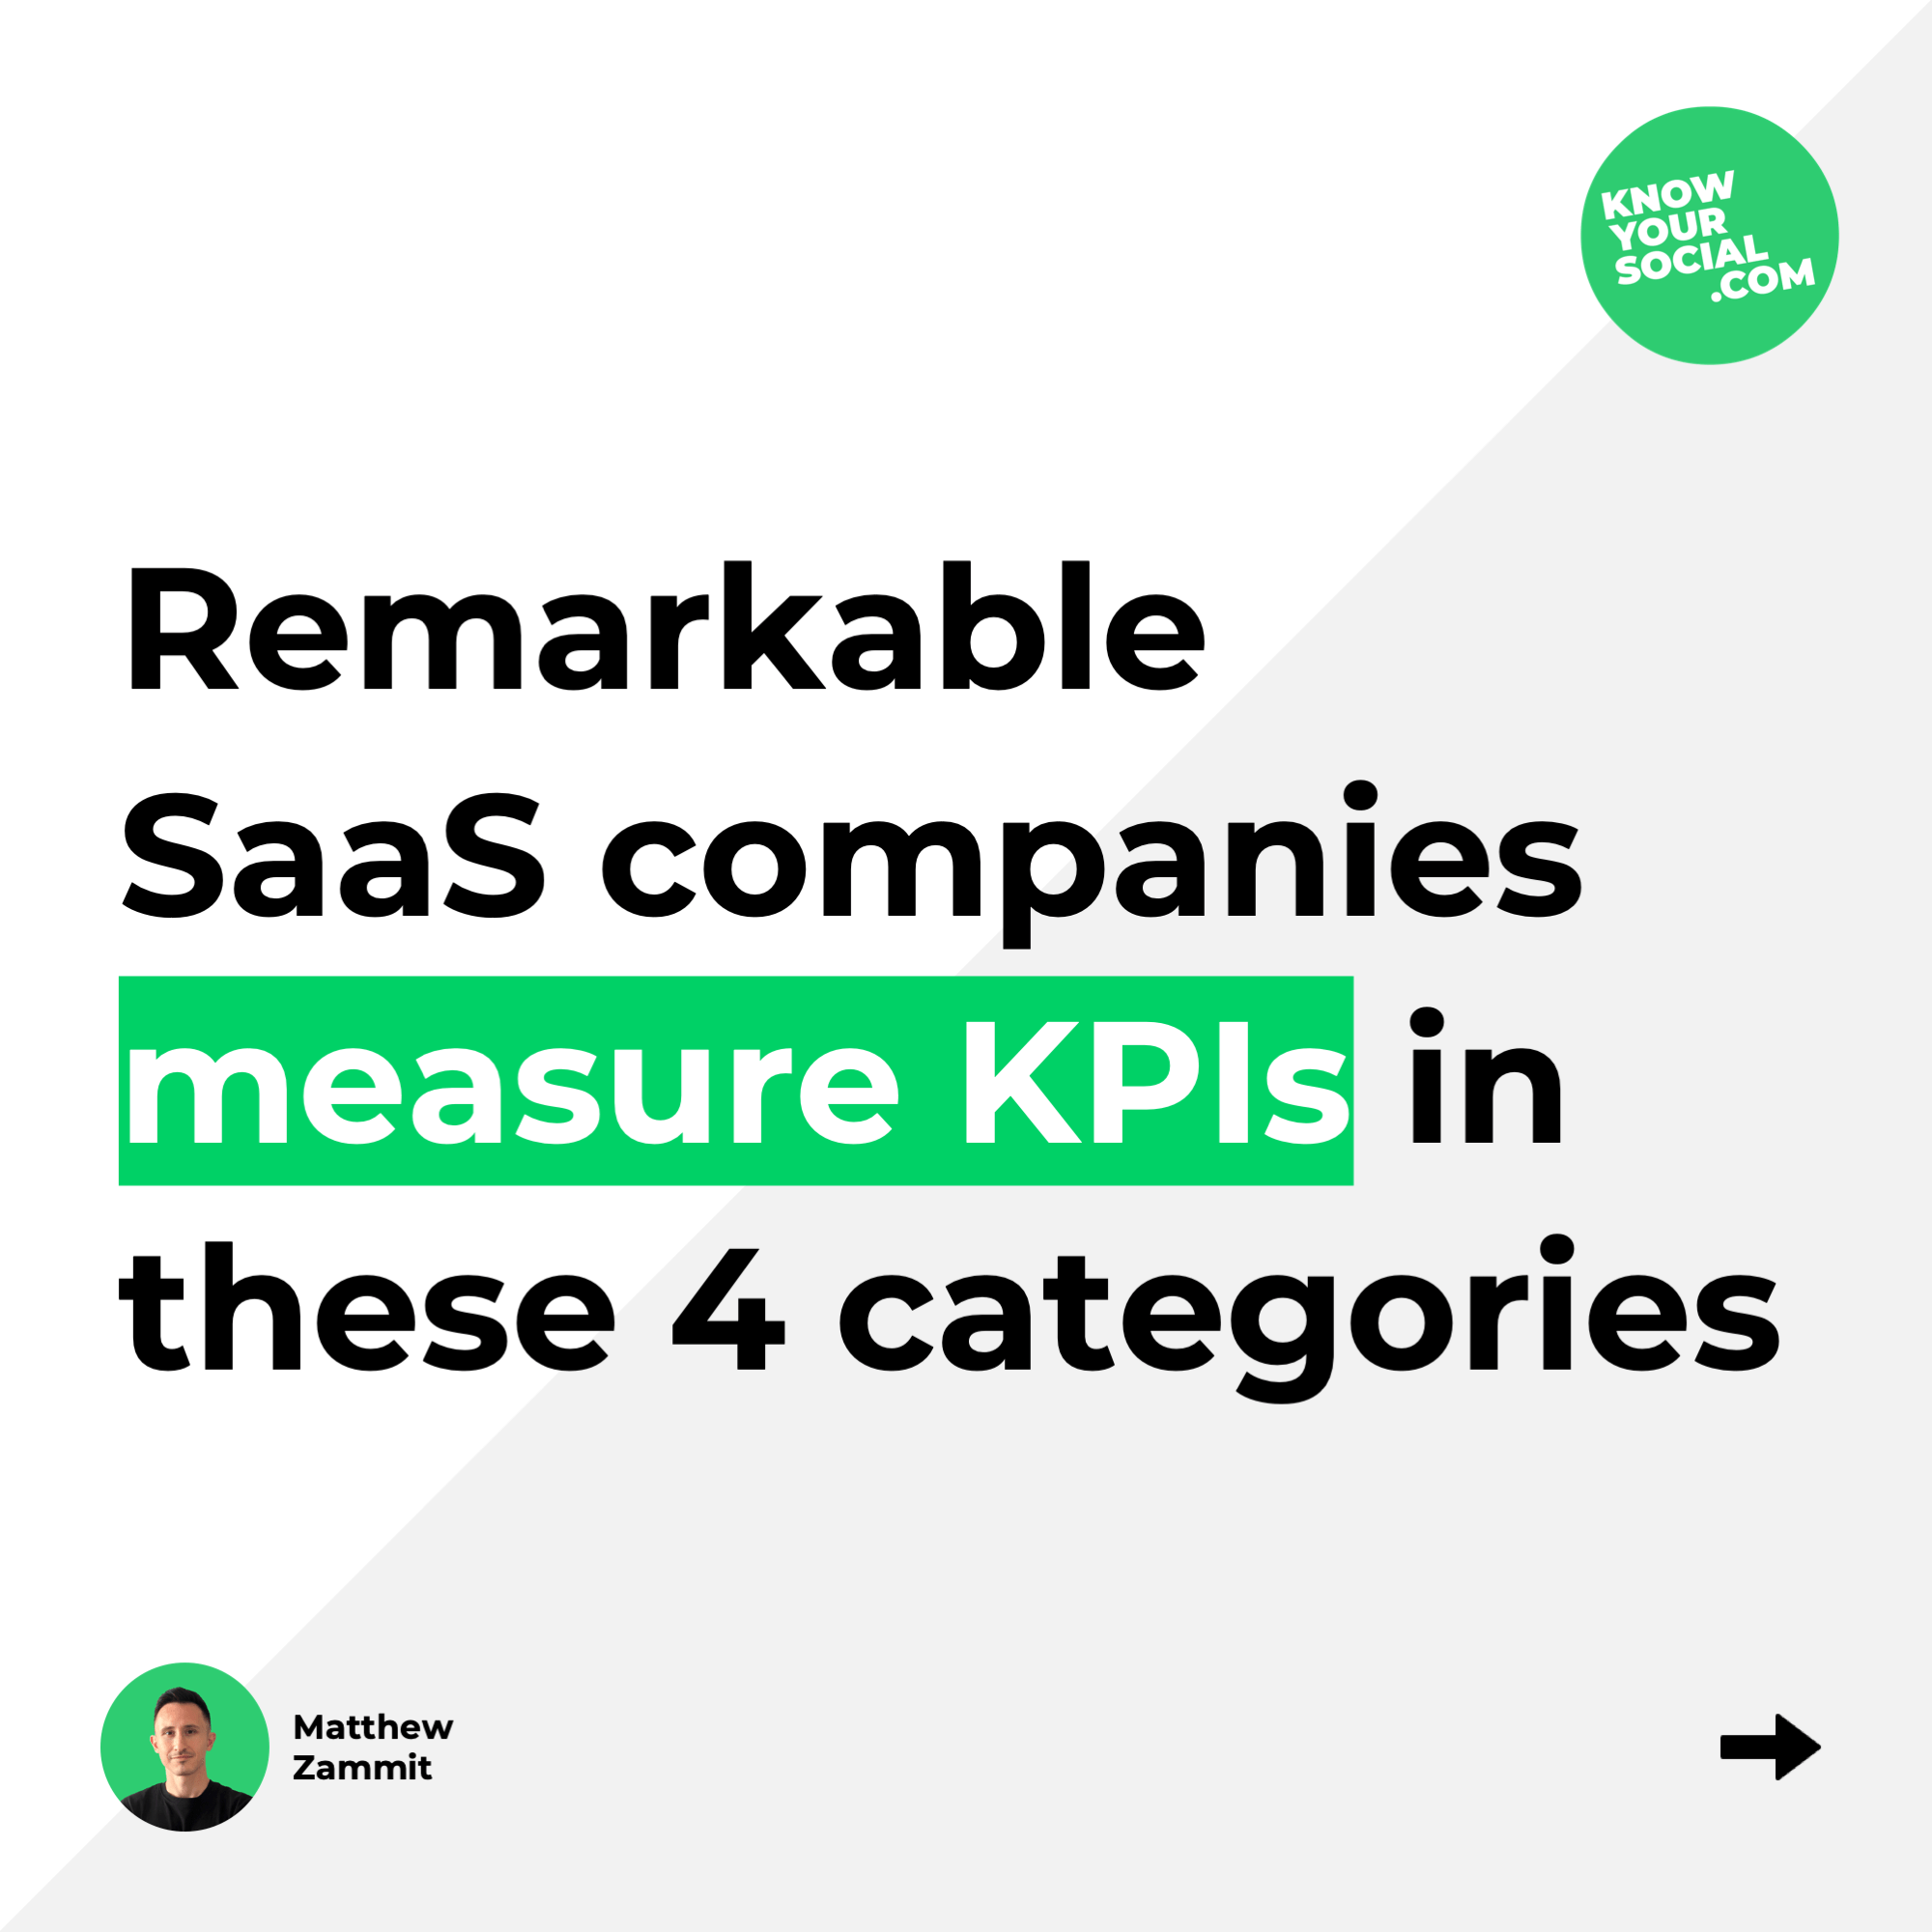 Remarkable SaaS companies measure KPIs in these 4 categories